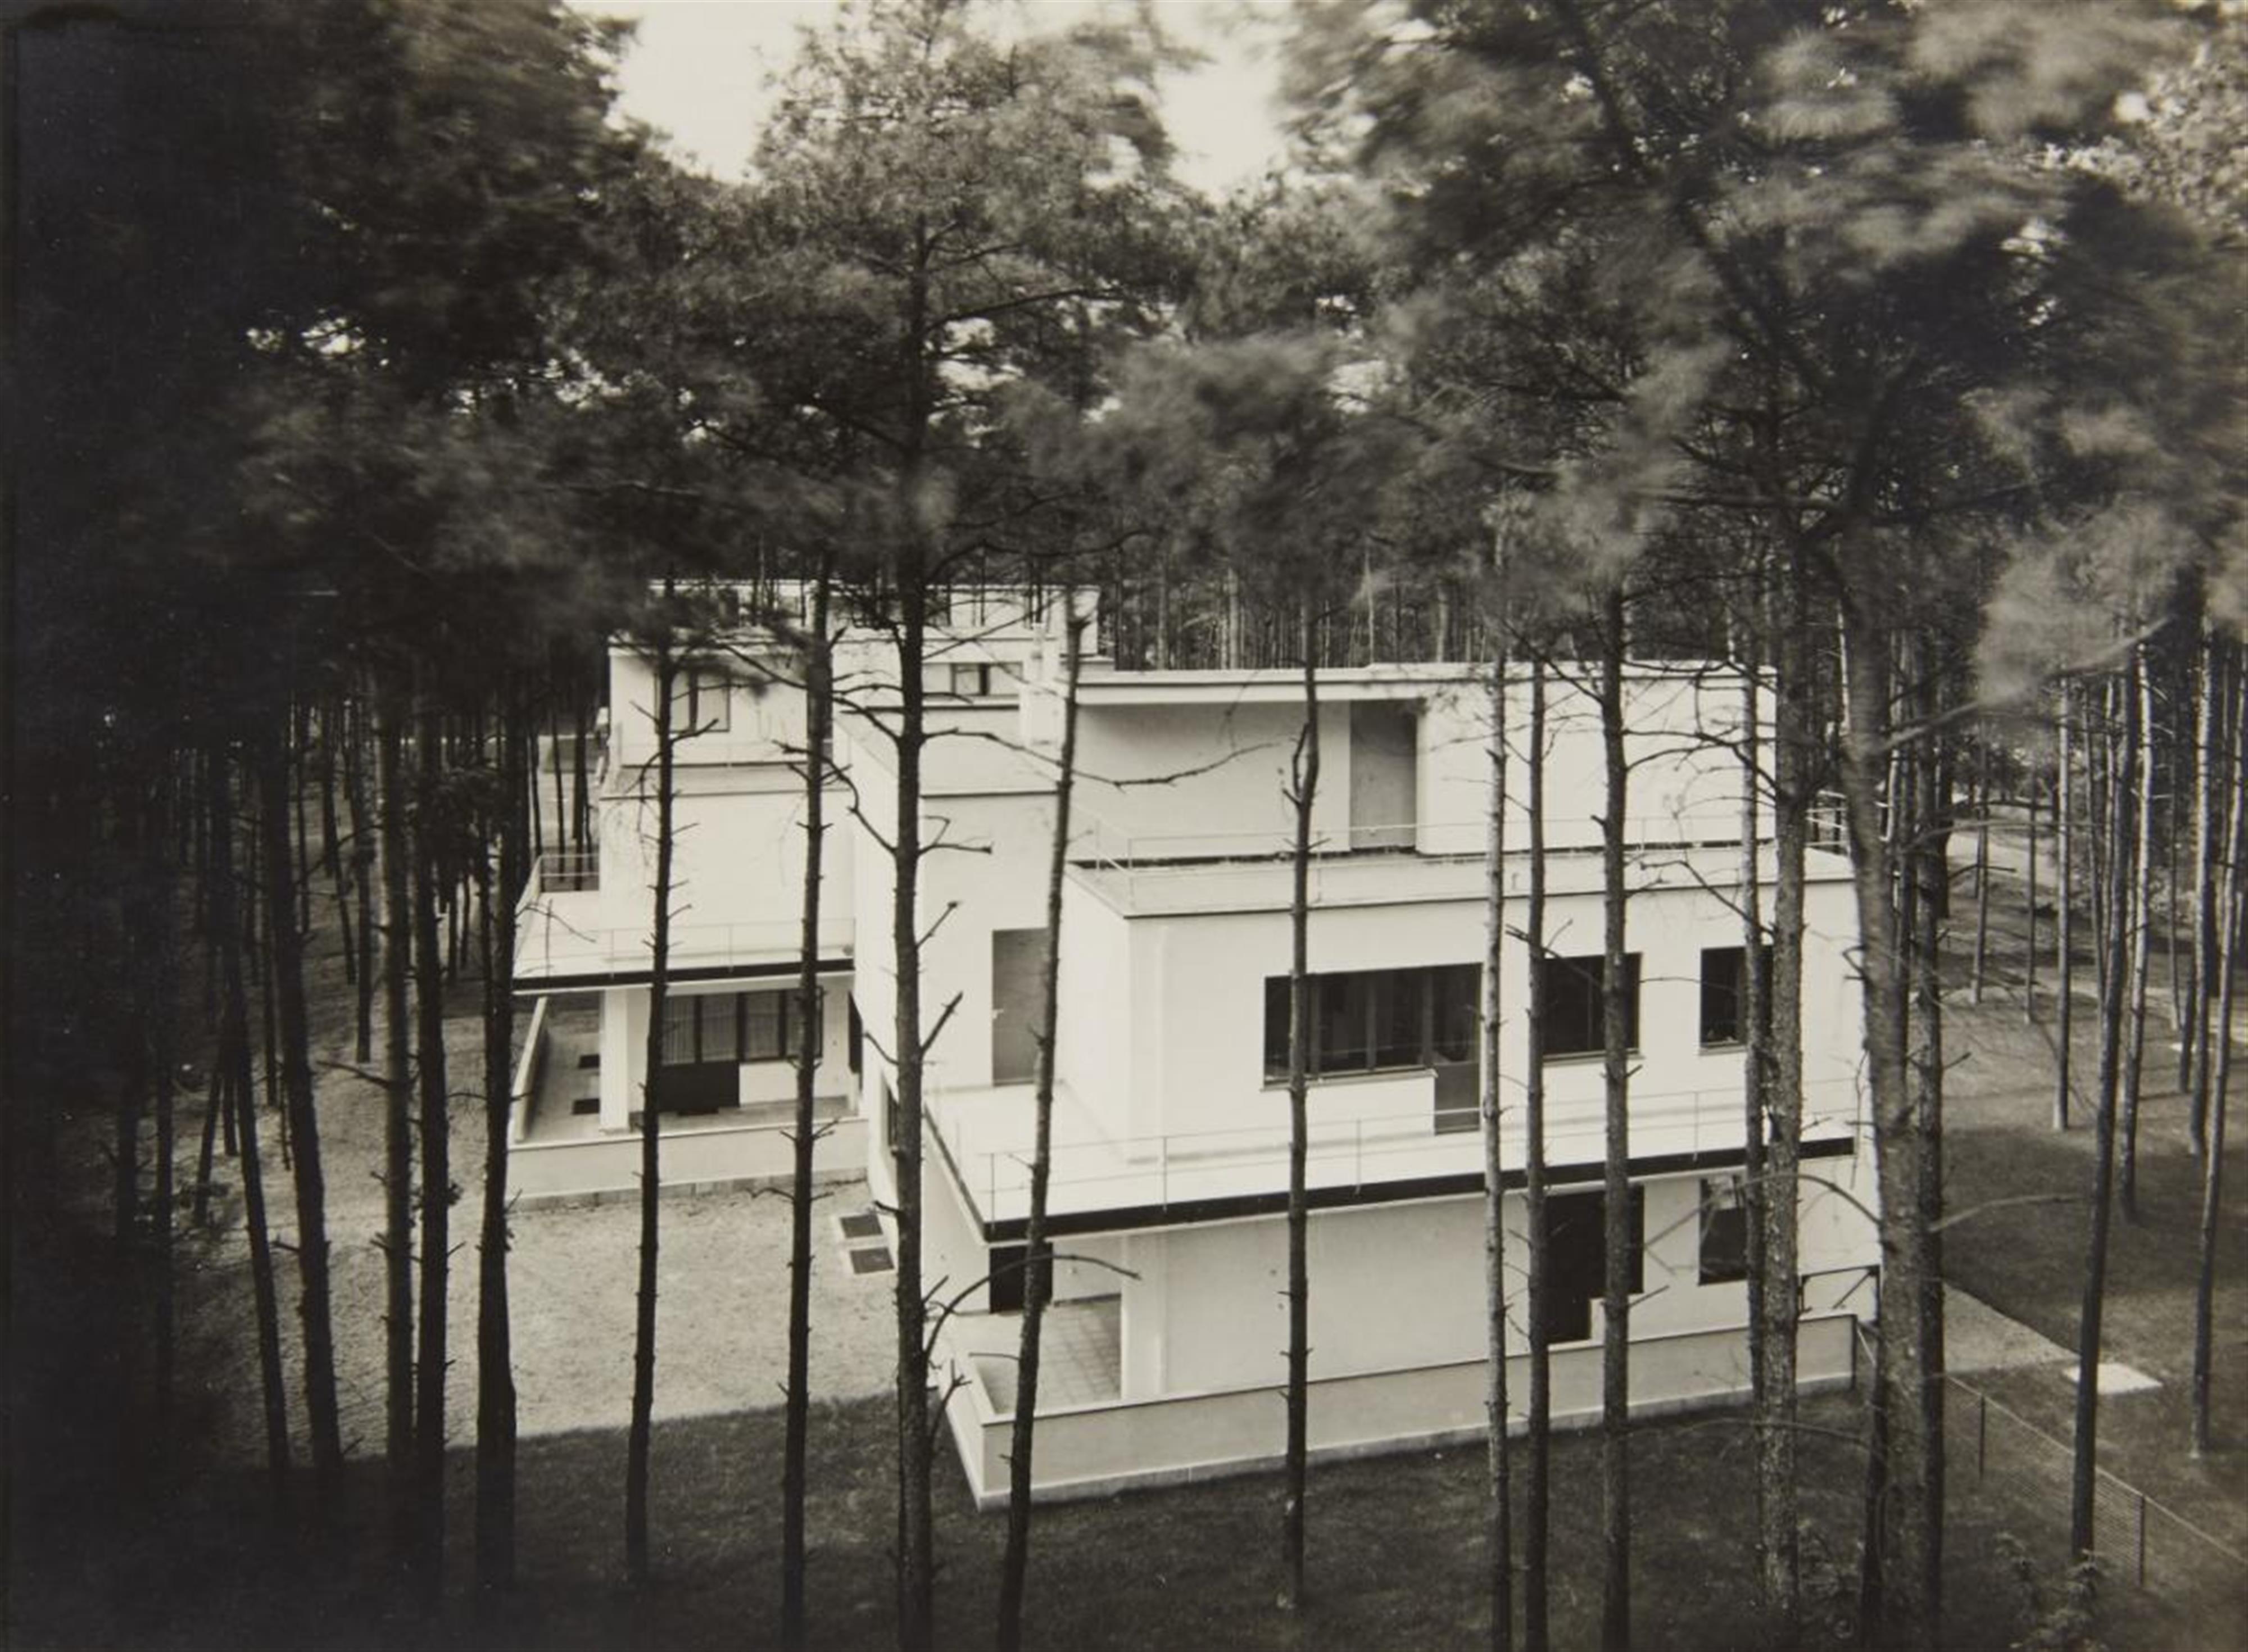 Lucia Moholy - Bauhaussiedlung Dessau, Doppelwohnhaus (Residential area, Bauhaus Dessau, semi-detached house) - image-1